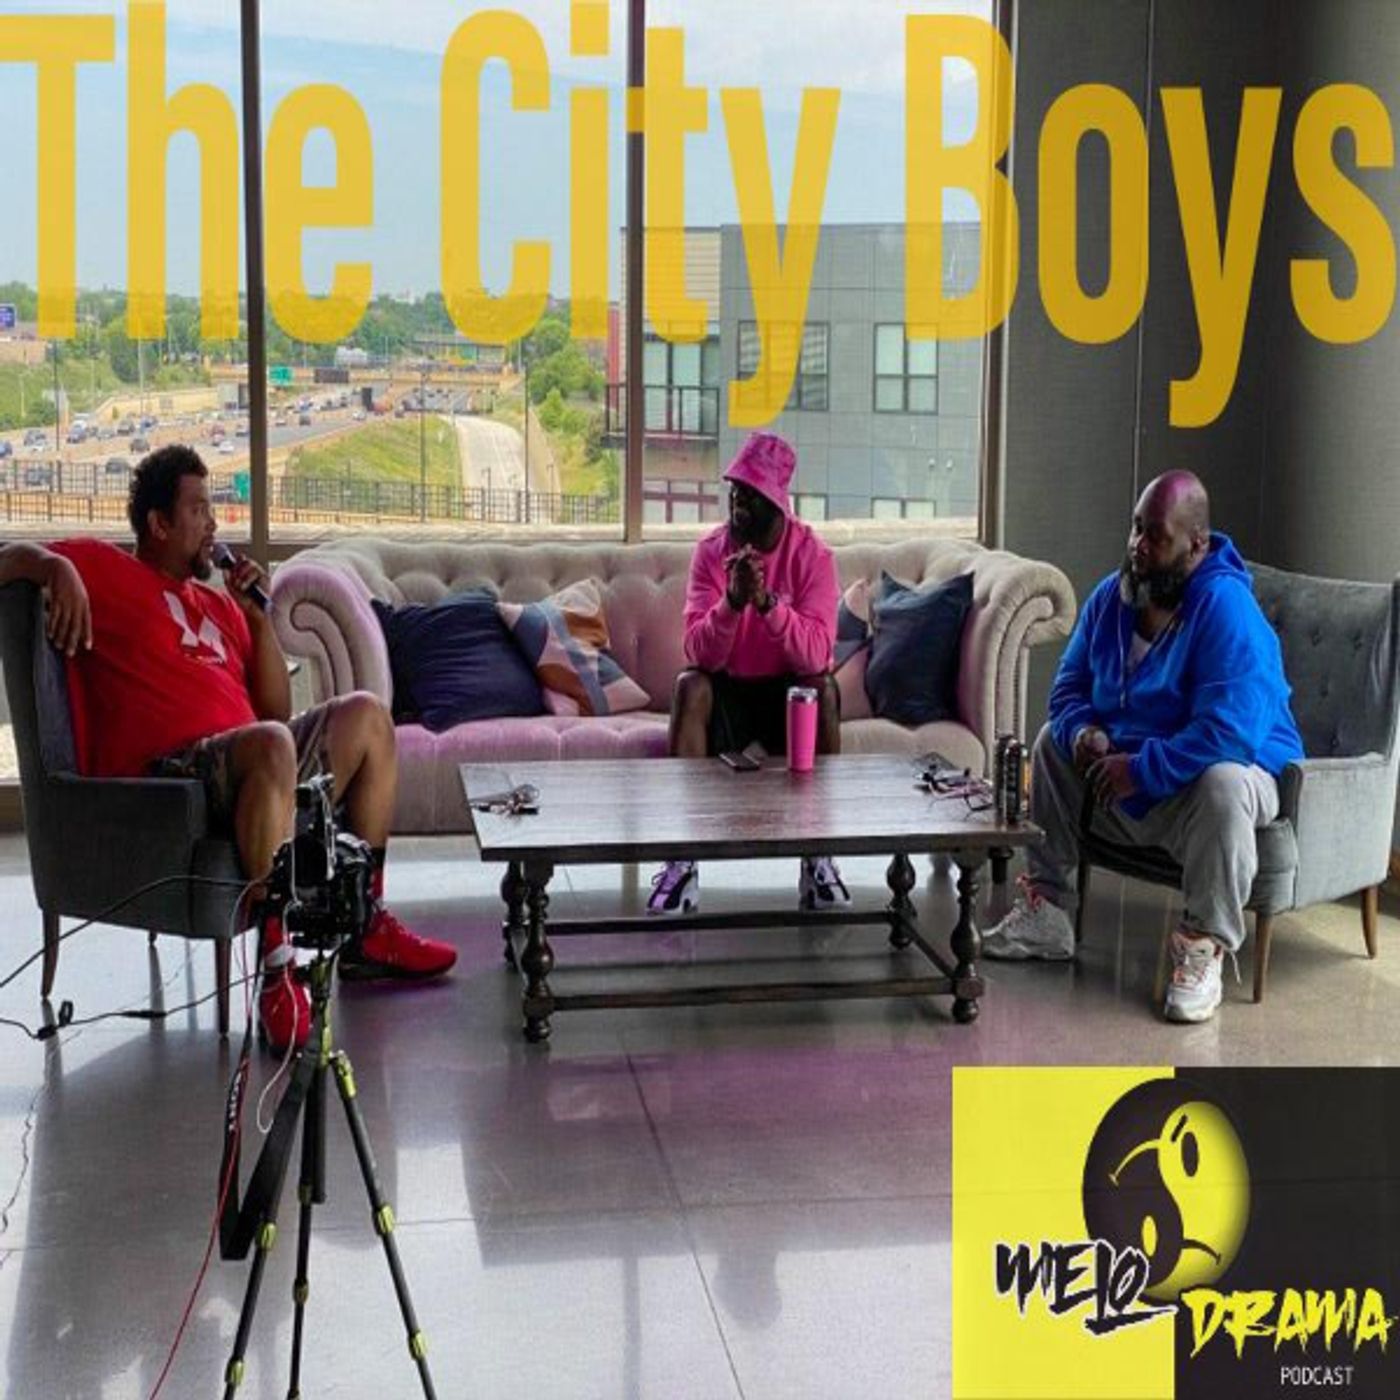 SZN2Episode 16: The City Boys